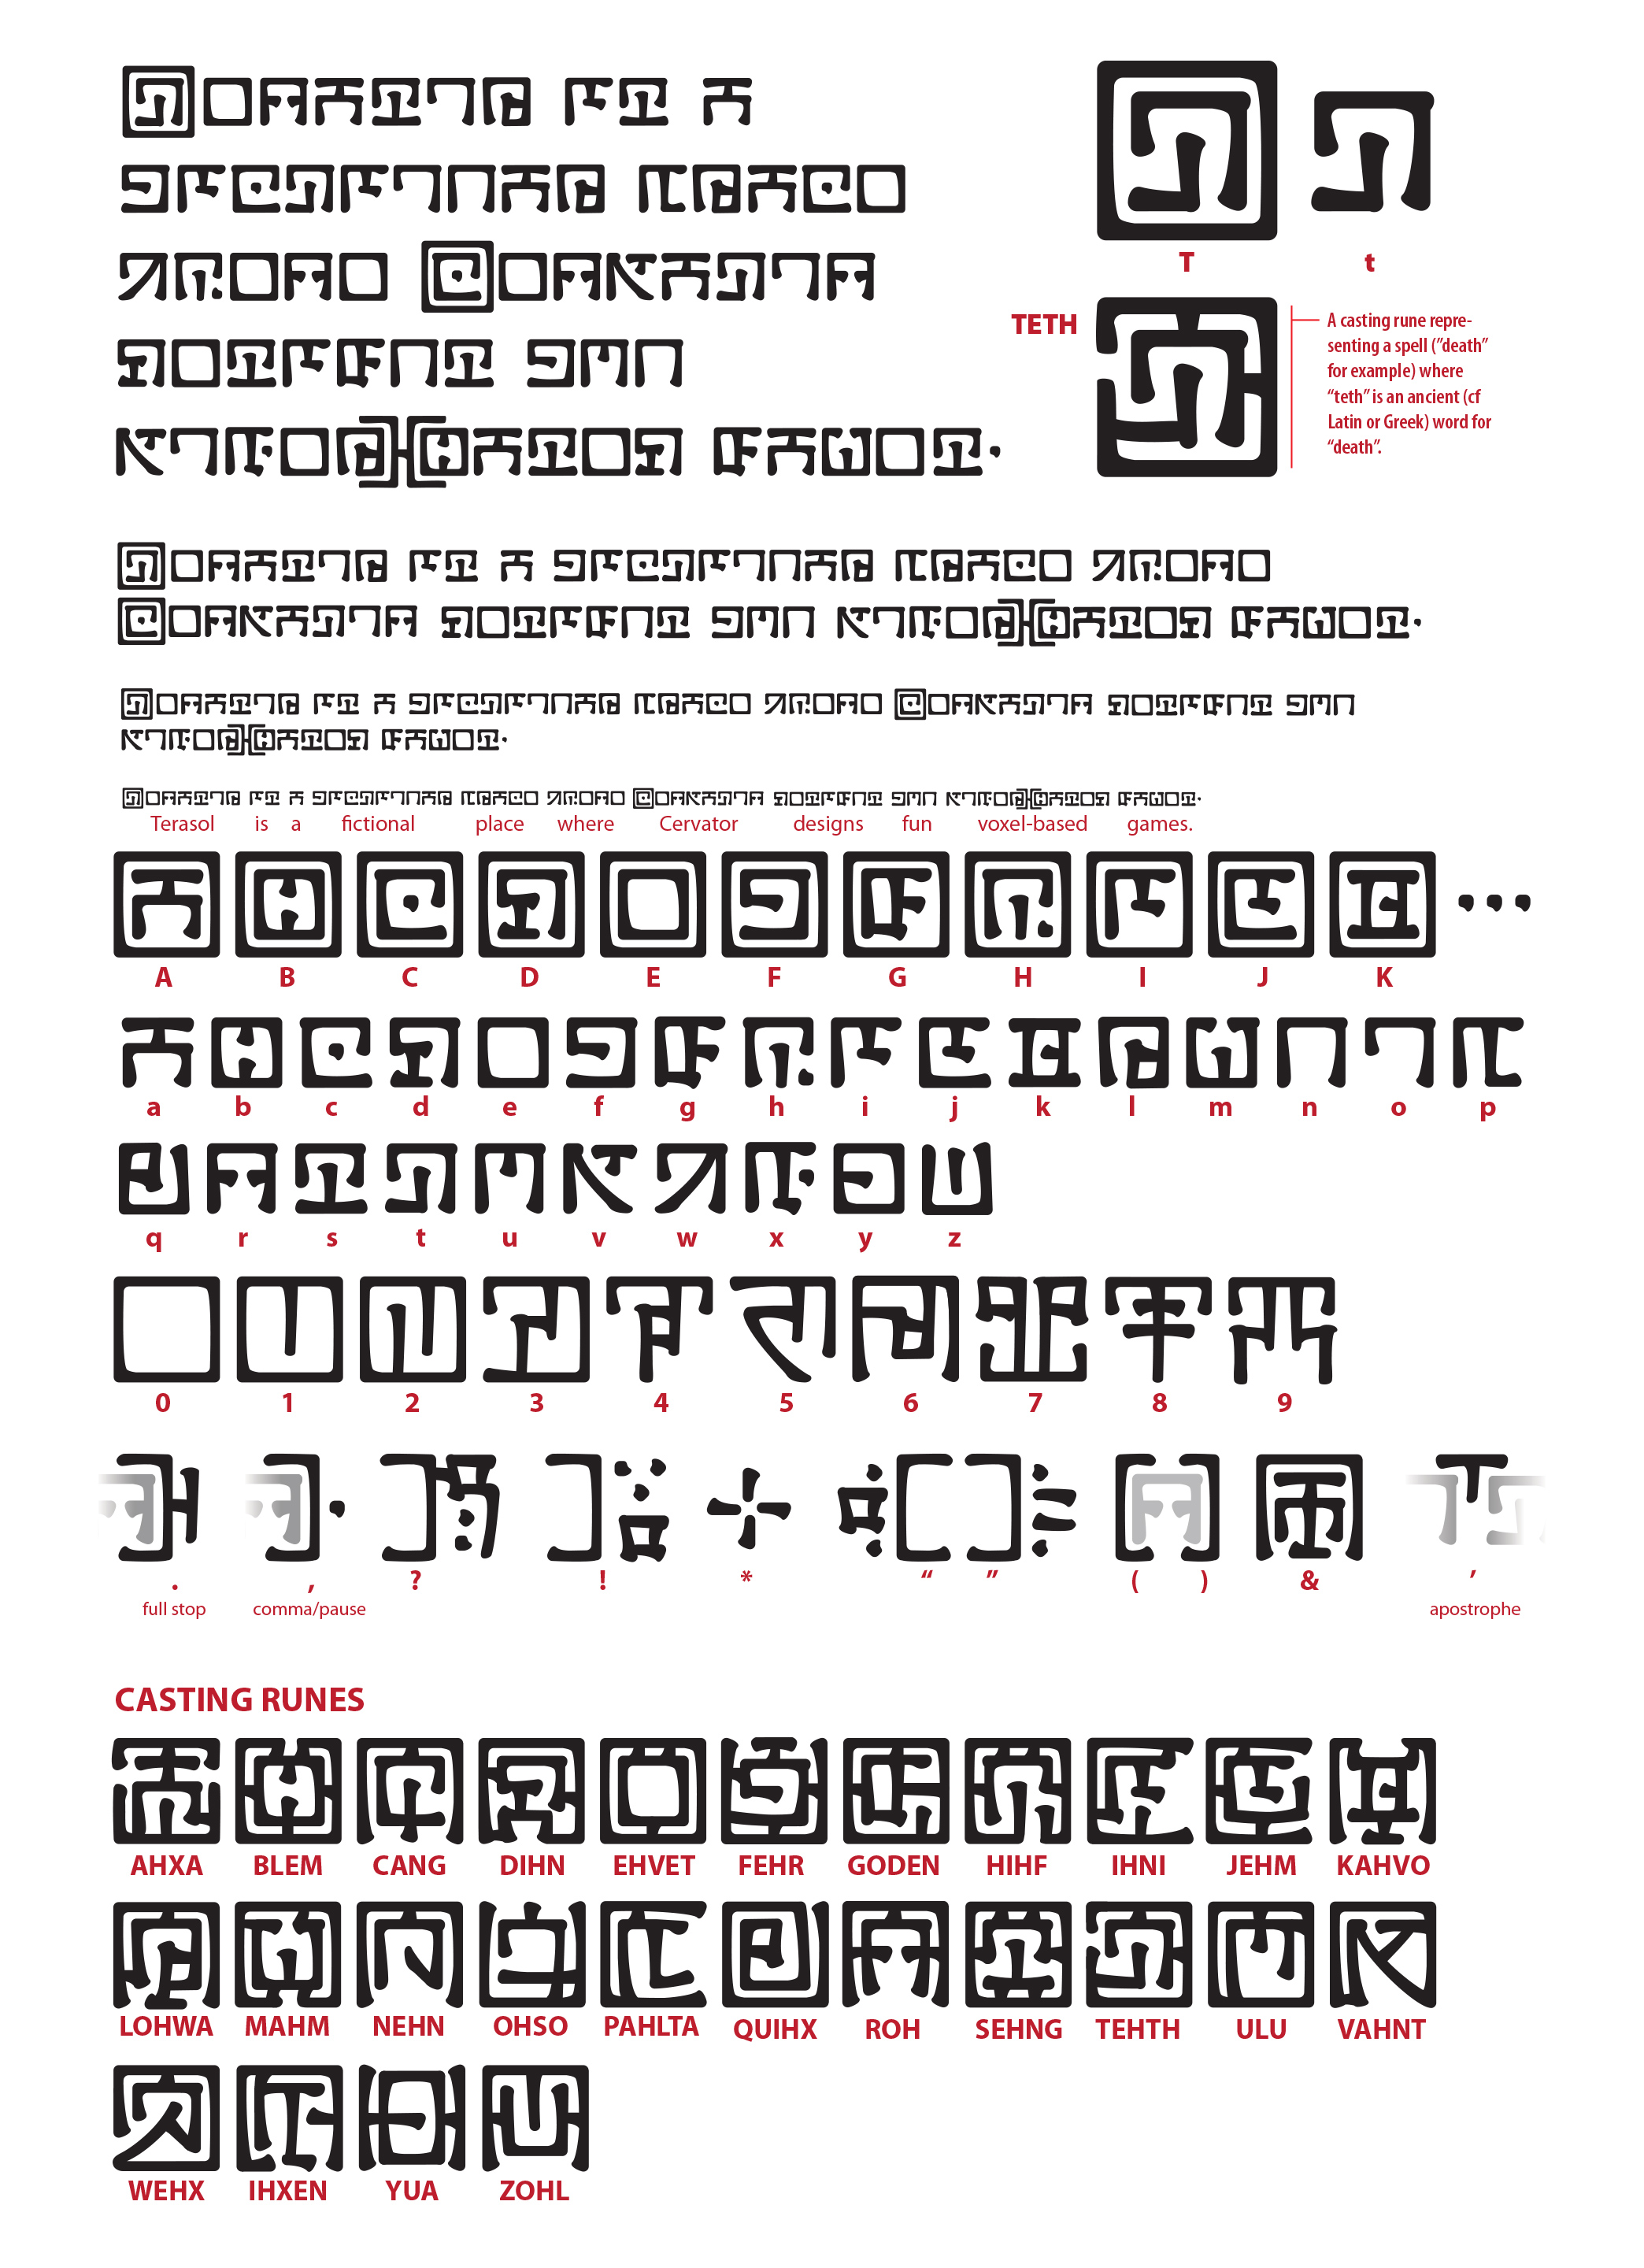 Terasolian-v3-with-Runes.jpeg